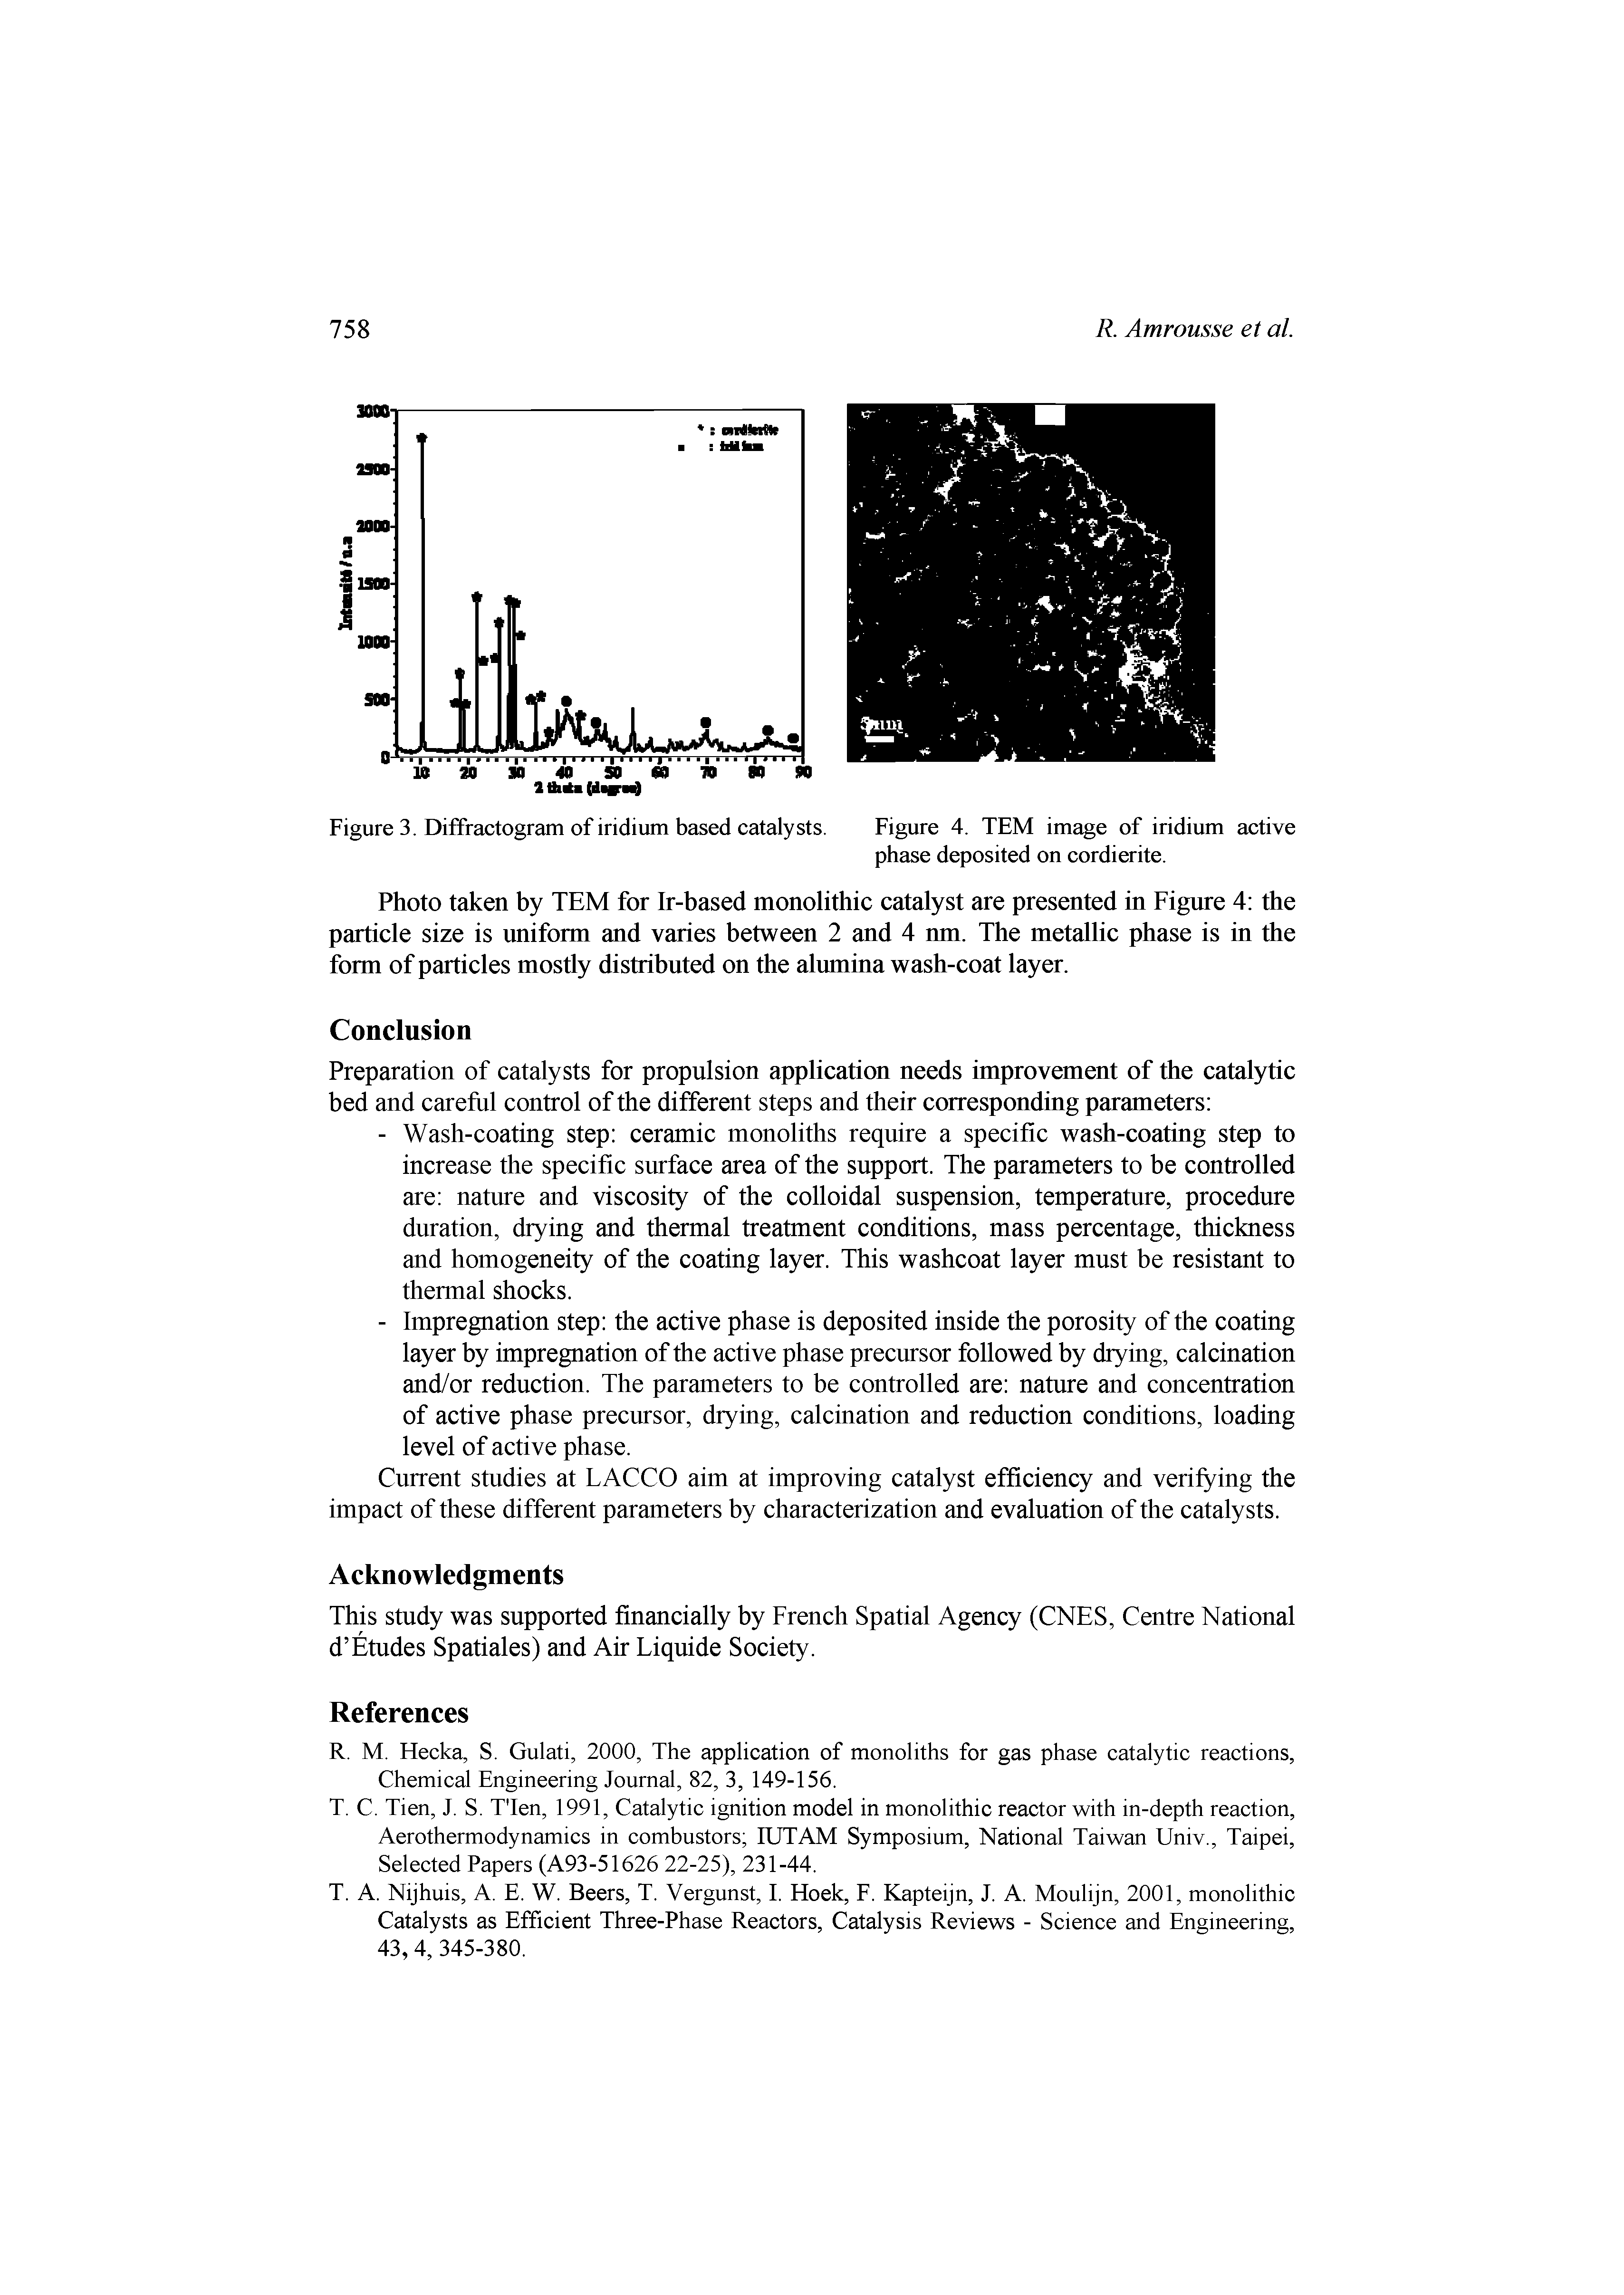 Figure 4. TEM image of iridium active phase deposited on cordierite.